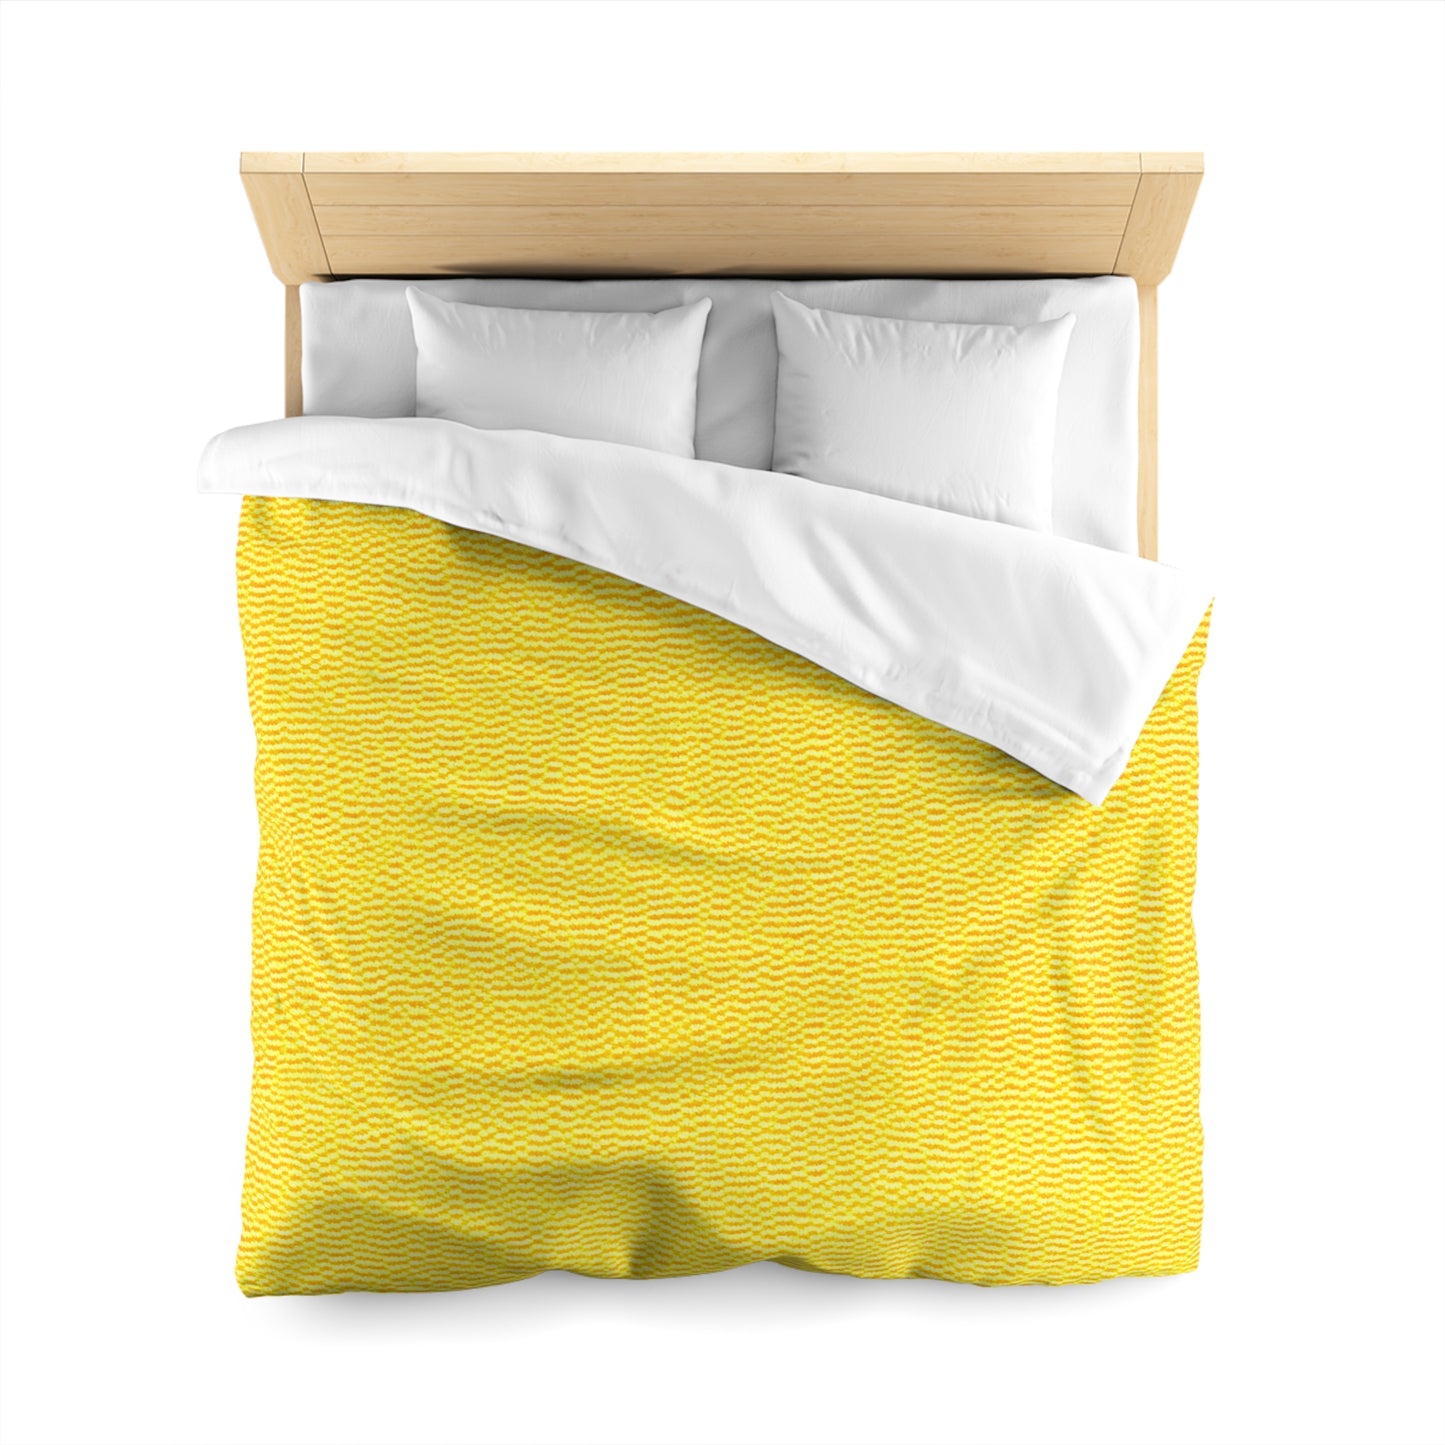 Sunshine Yellow Lemon: Denim-Inspired, Cheerful Fabric - Microfiber Duvet Cover